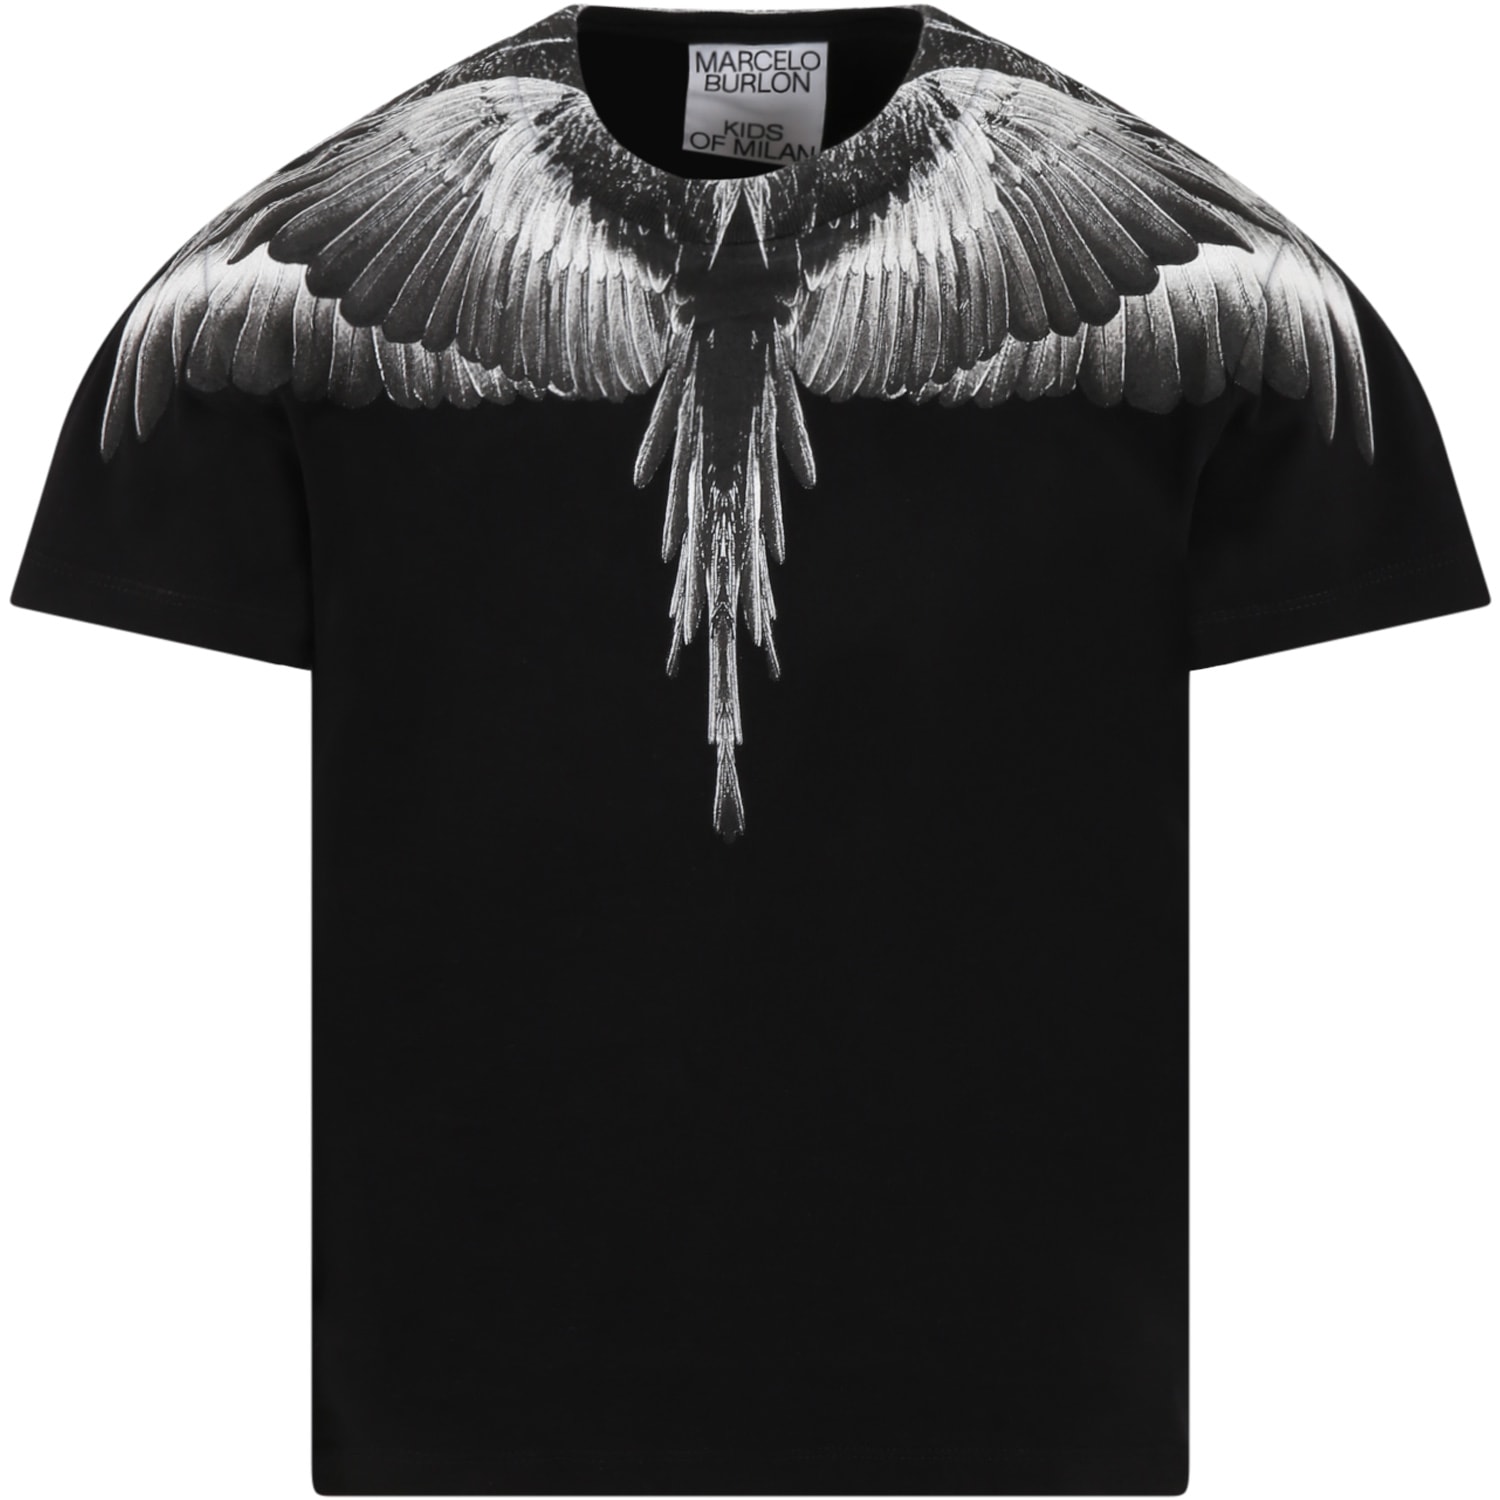 Marcelo Burlon Black T-shirt For Boy With Wings